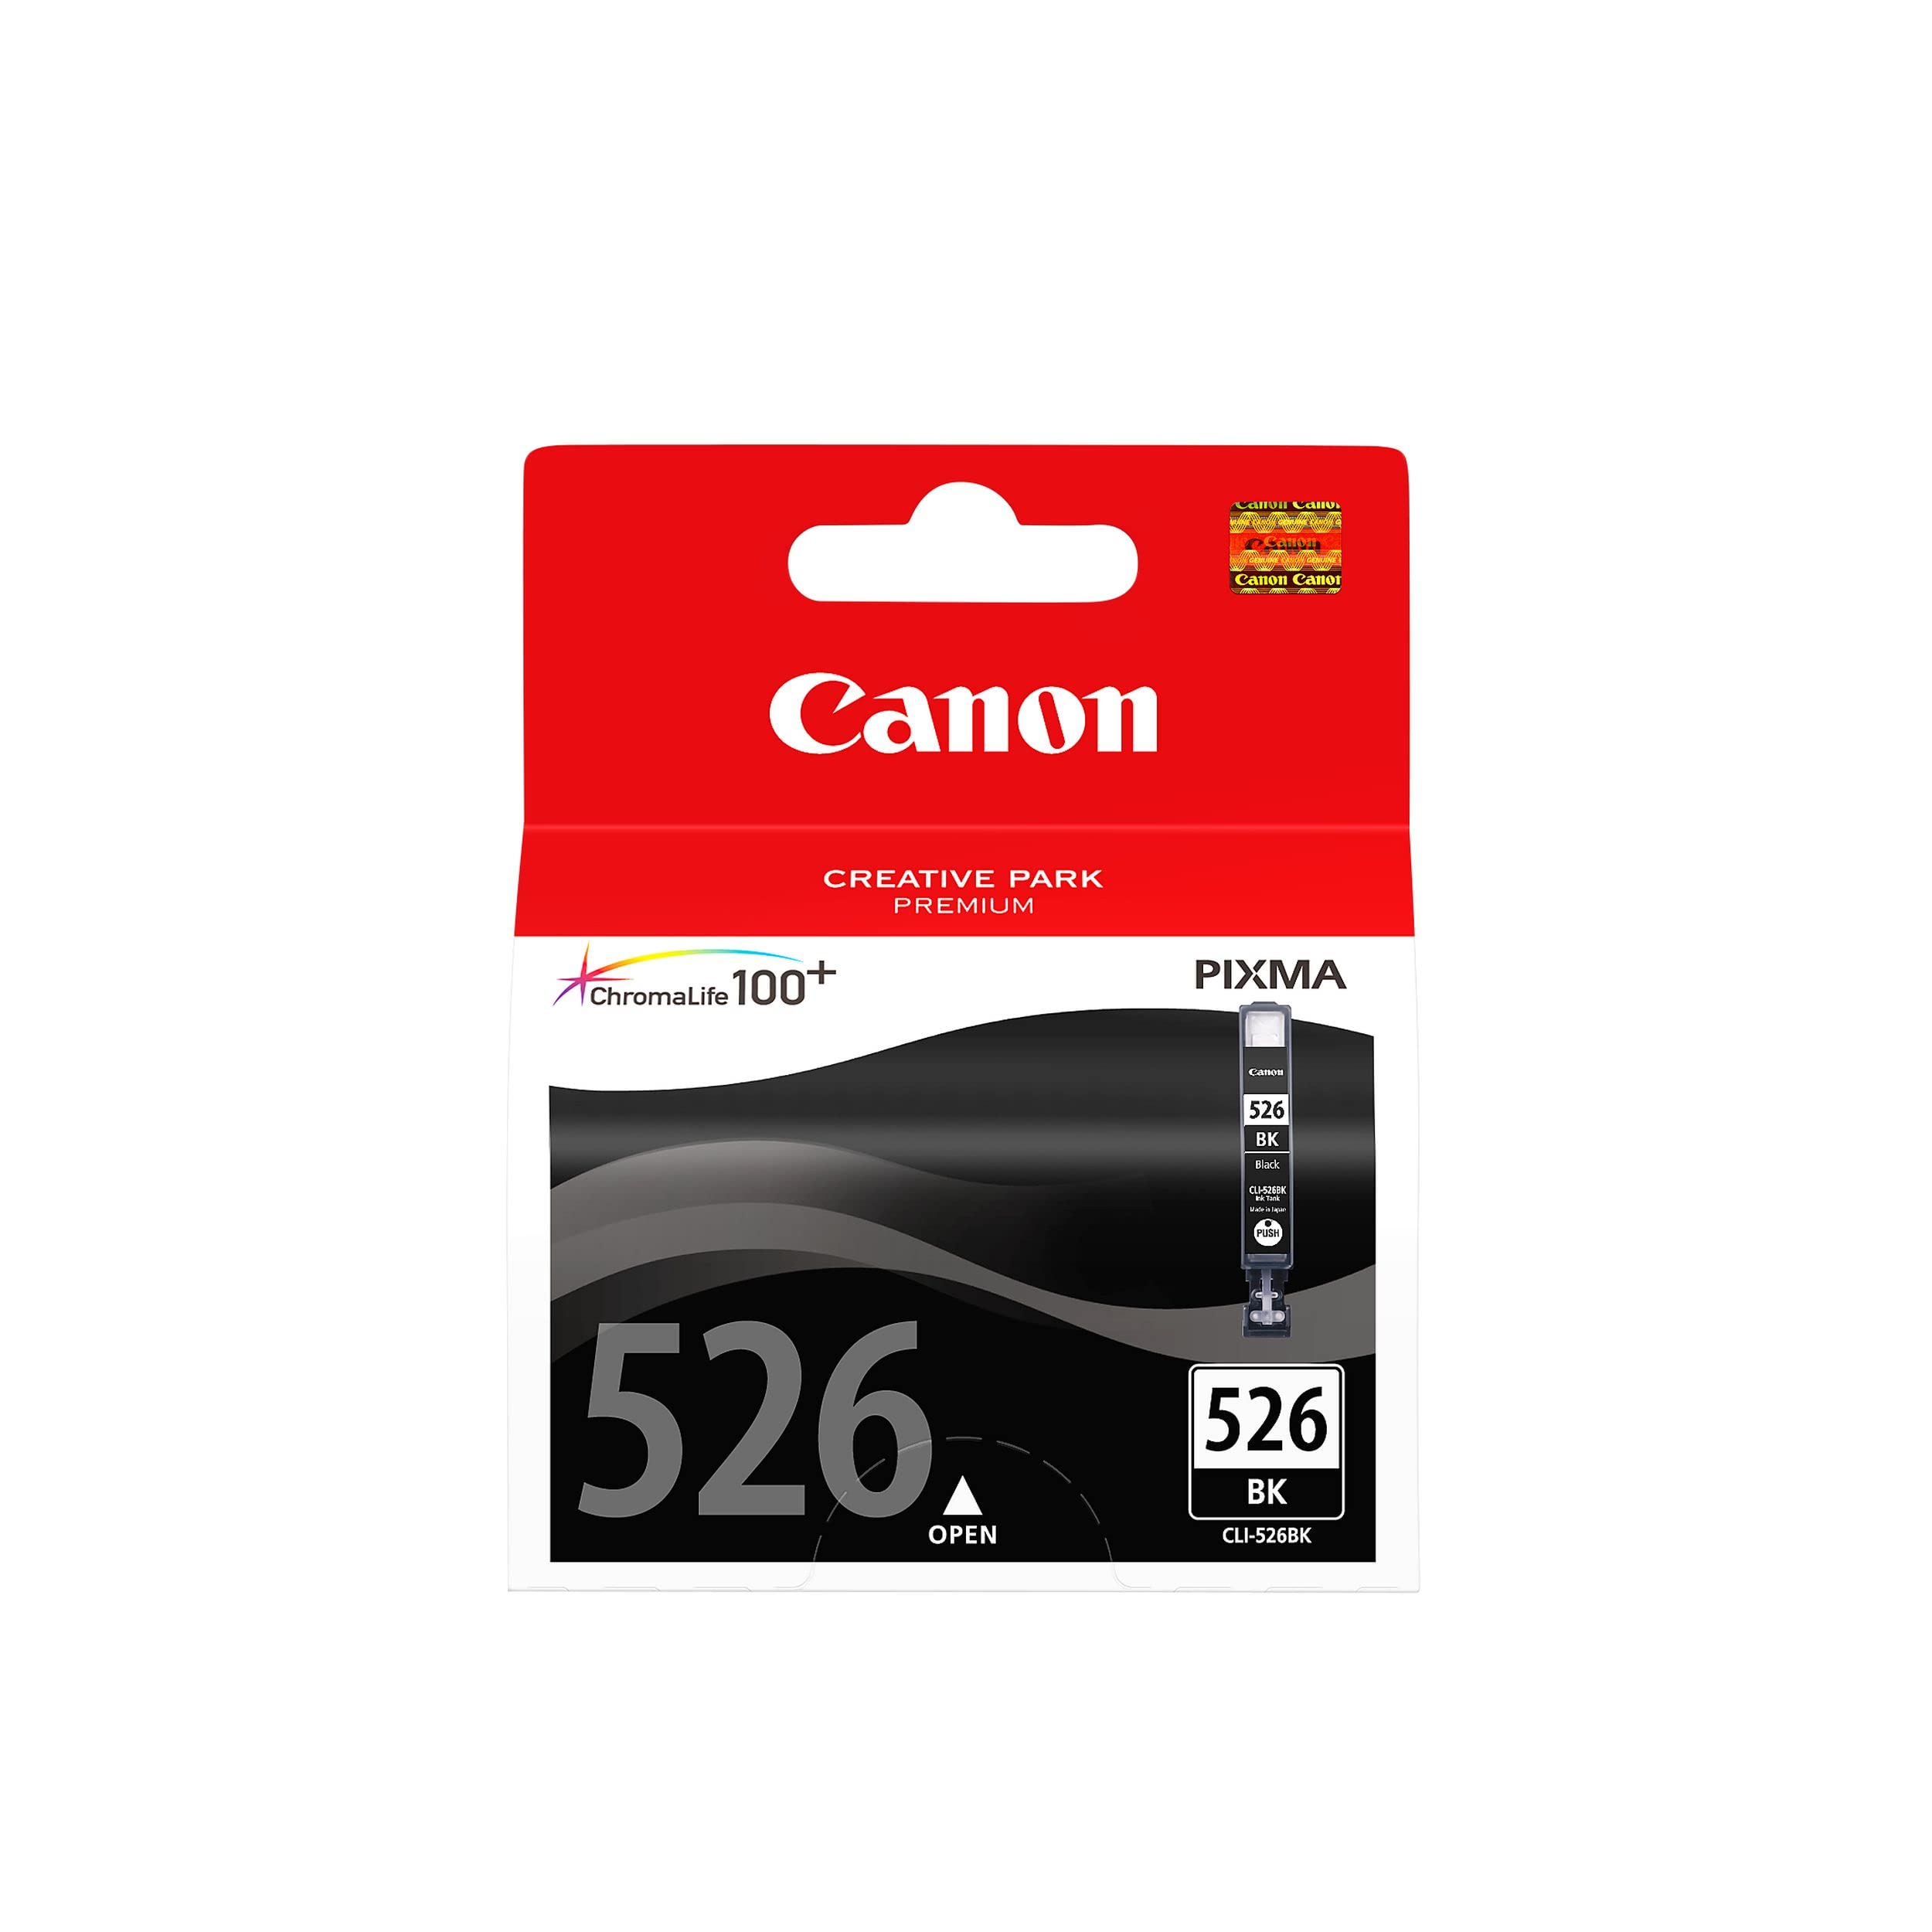 Canon (CO67002) Ink Cartridge, Black